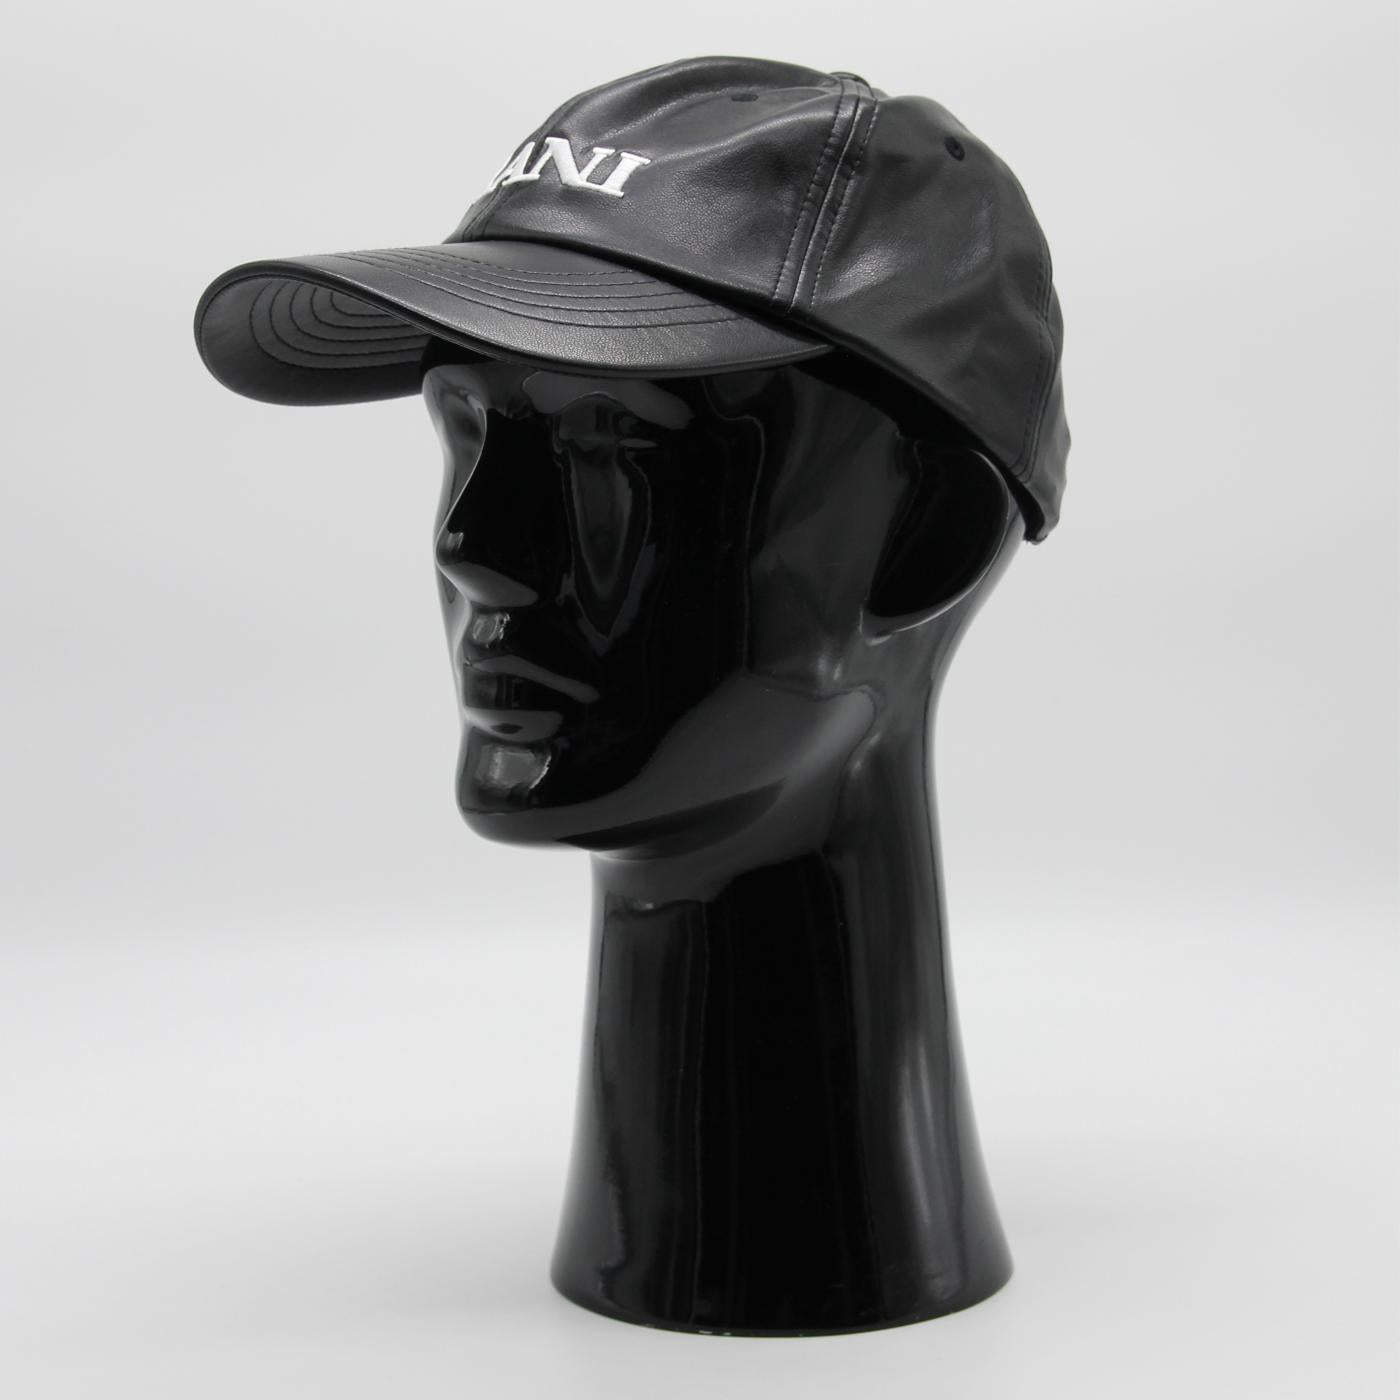 Karl Kani Retro Fake Leather cap black - Shop-Tetuan